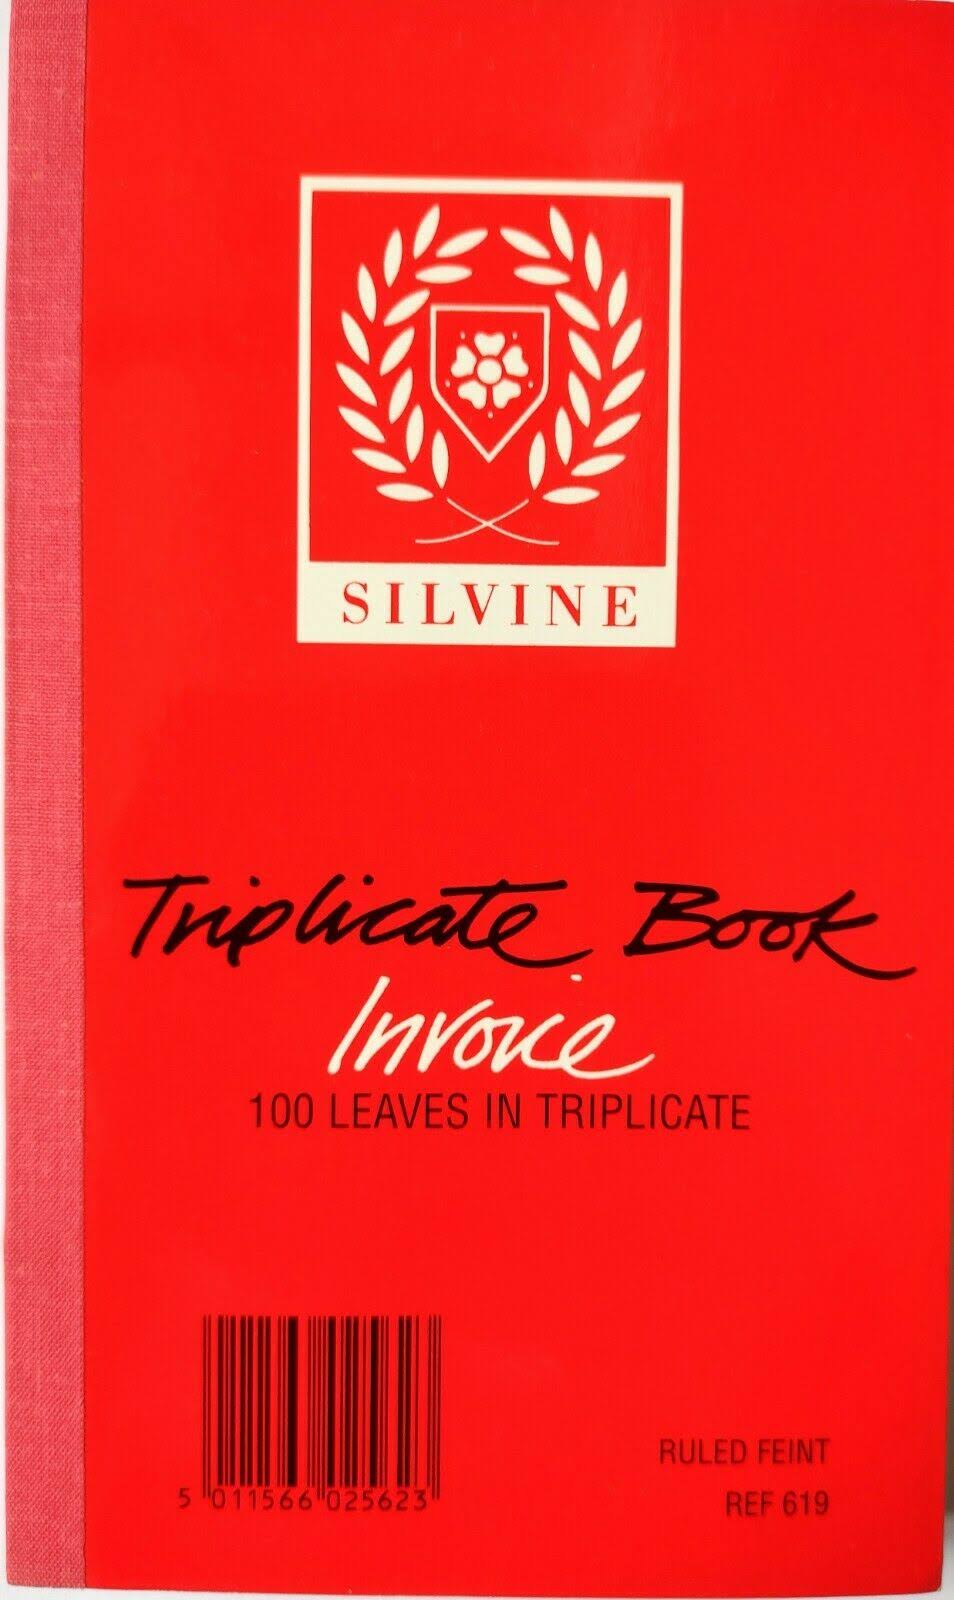 Silvine  Triplicate Invoice Book